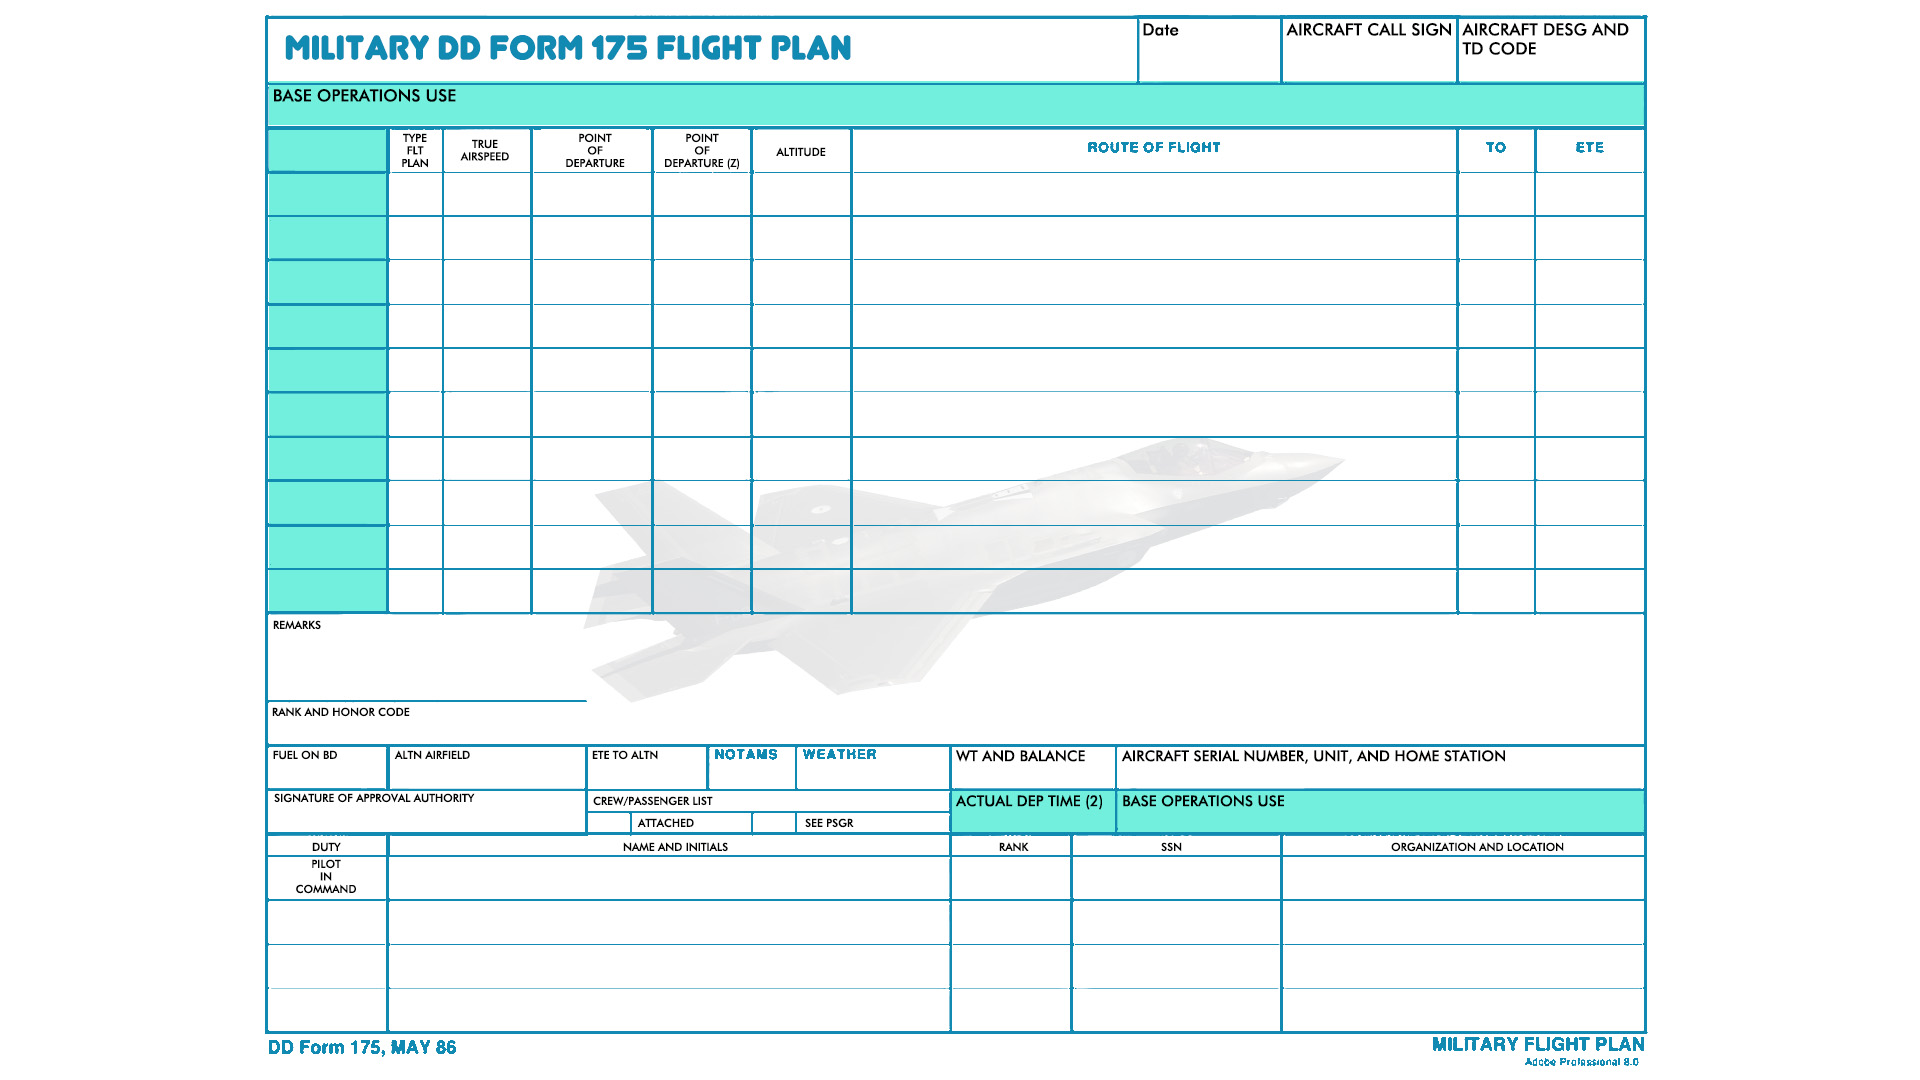 Military DD Form 175 Flight Plan Image